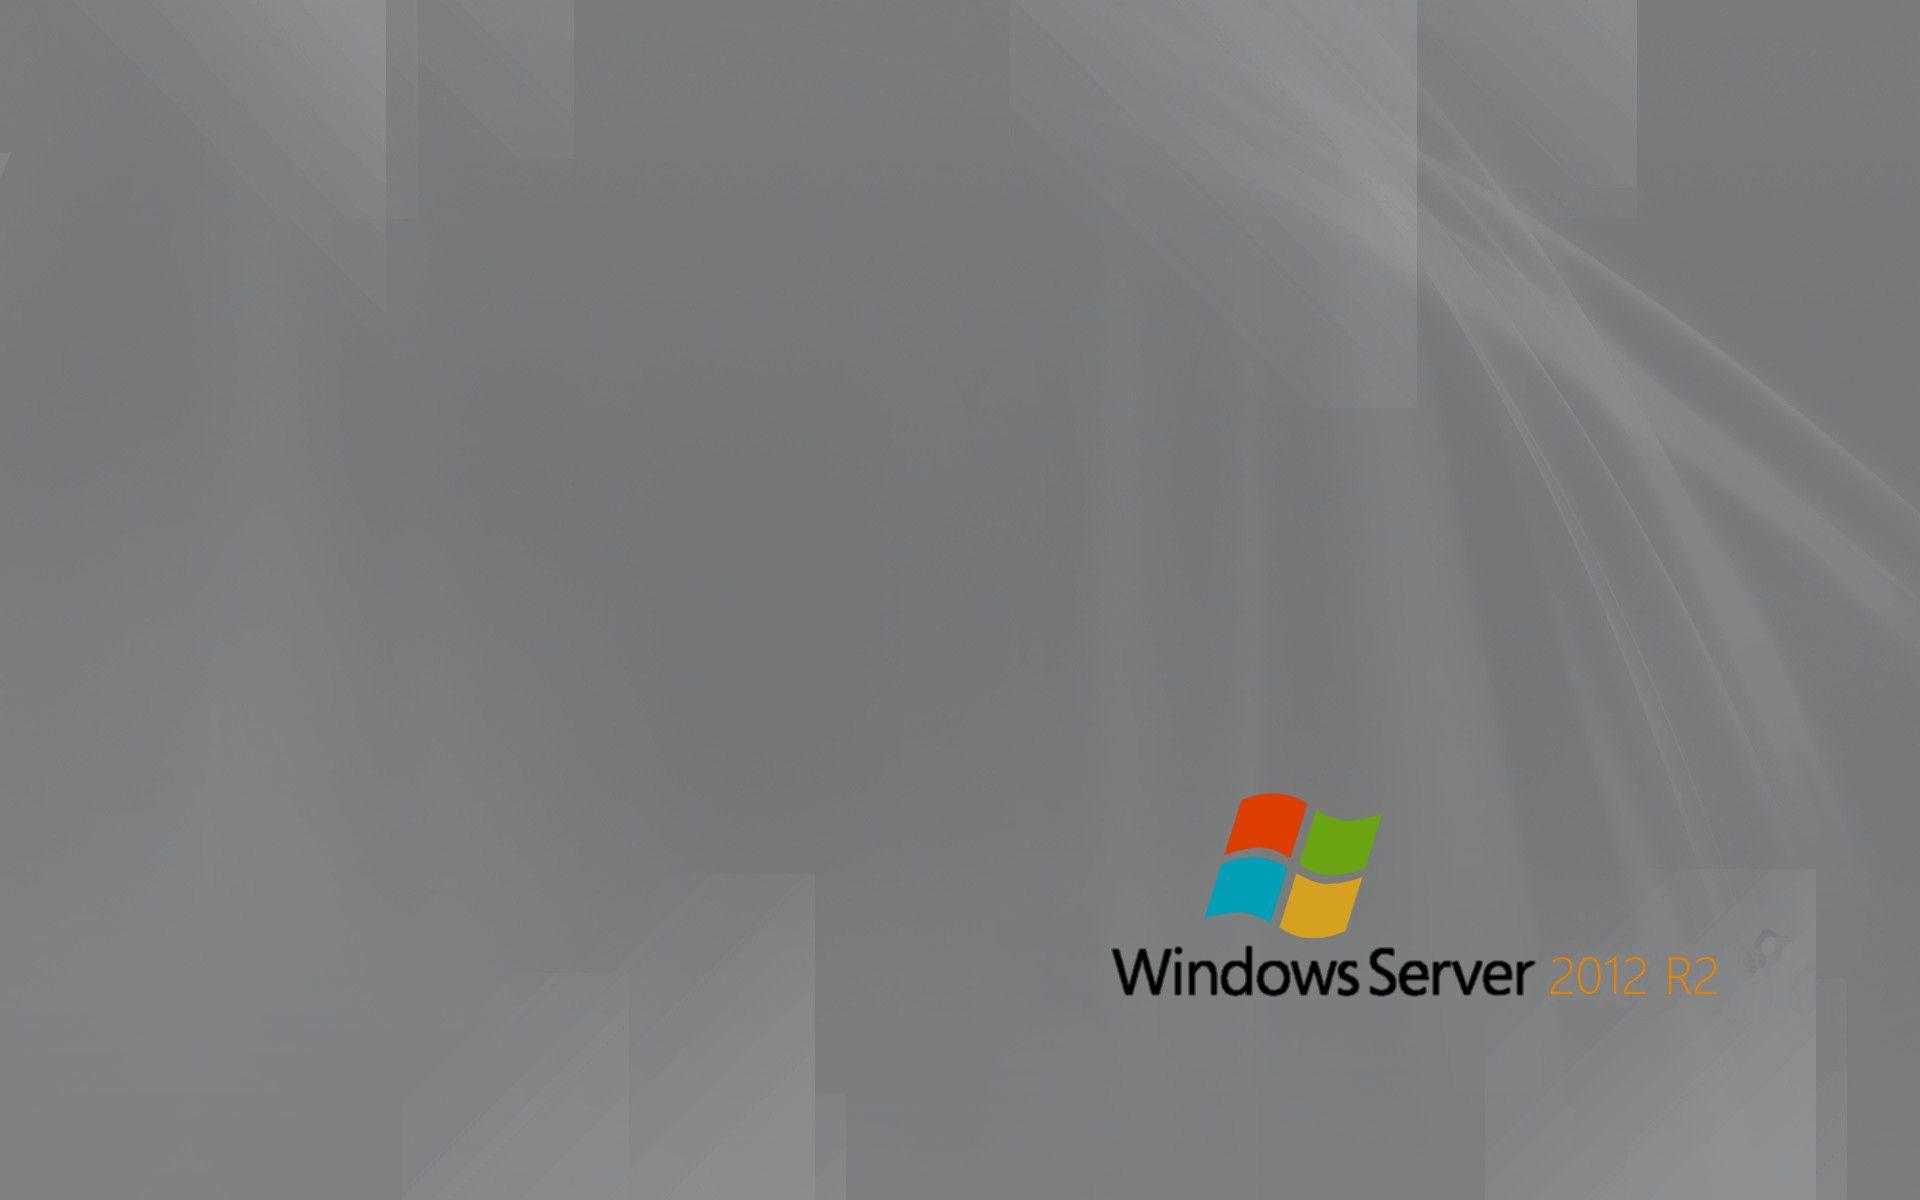 Windows Server Wallpaper background picture